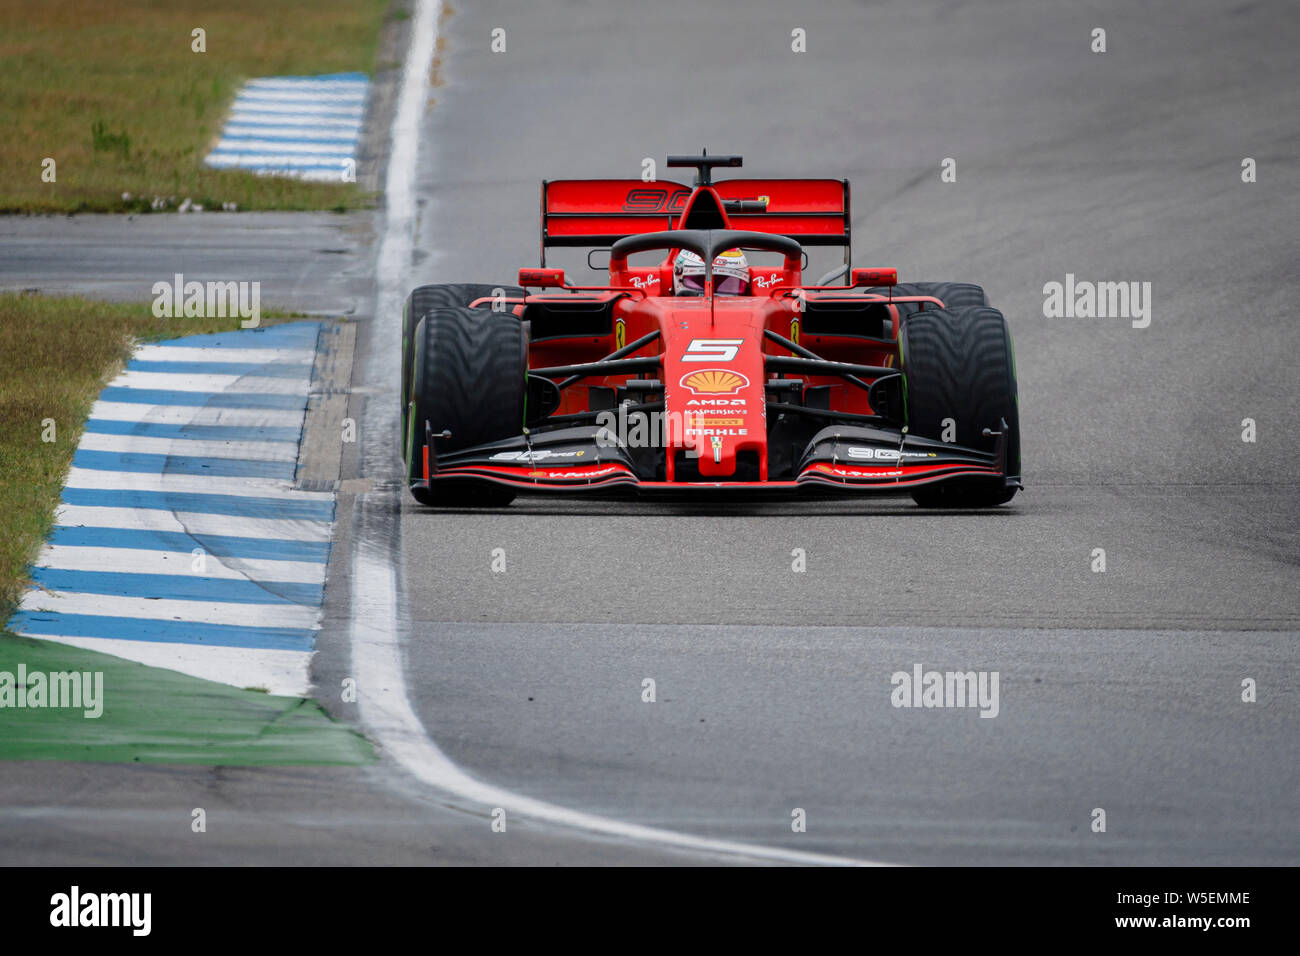 Hockenheim, Germany. 28th July, 2019. Scuderia Ferrari's German driver Sebastian Vettel competes during the German F1 Grand Prix race. Credit: SOPA Images Limited/Alamy Live News Stock Photo